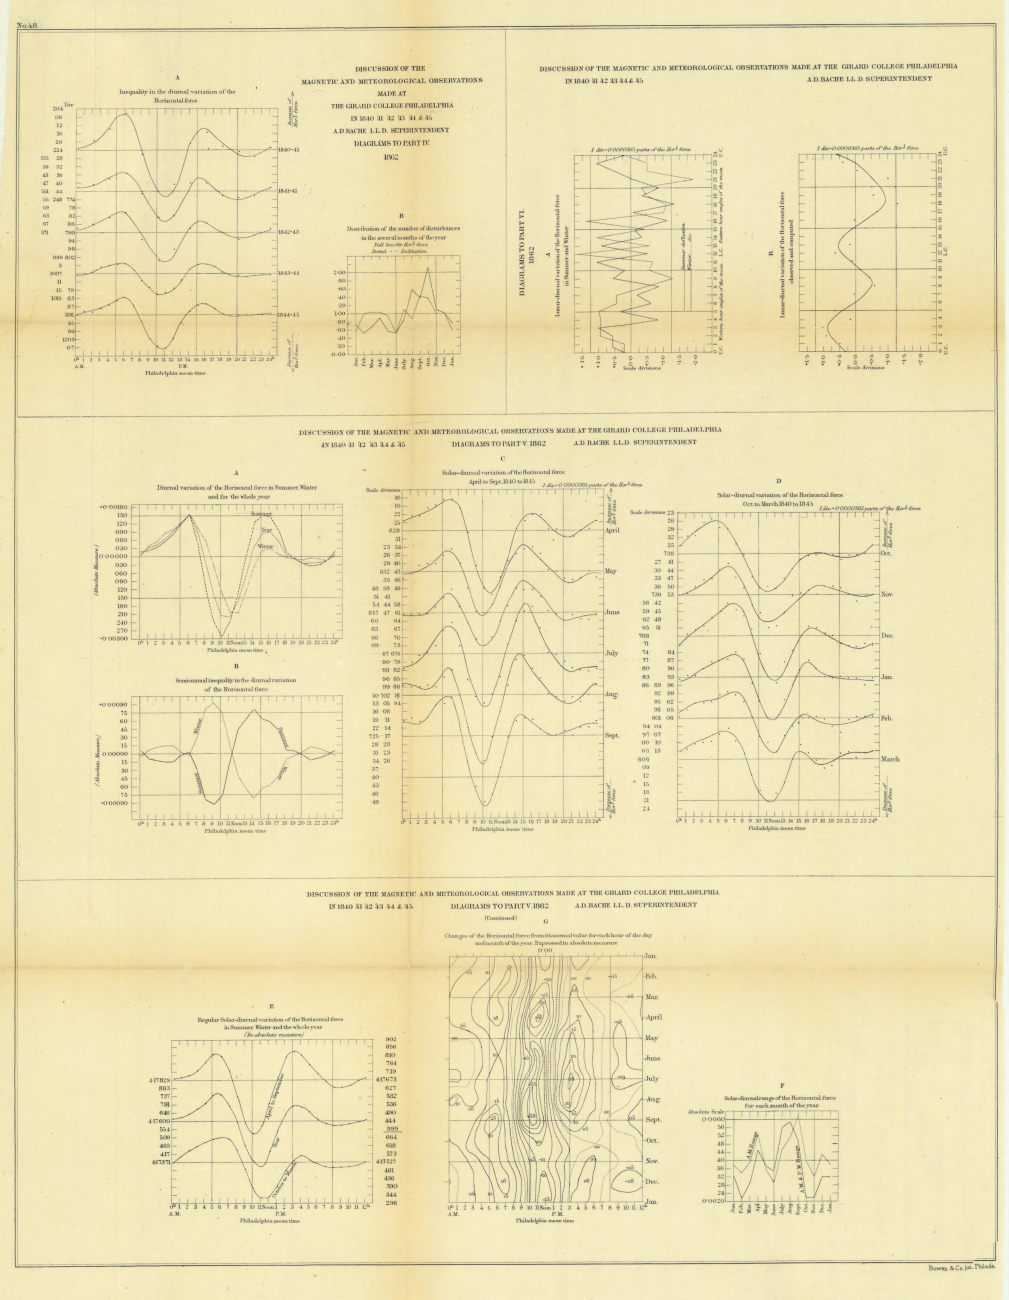 Annual Report 1862